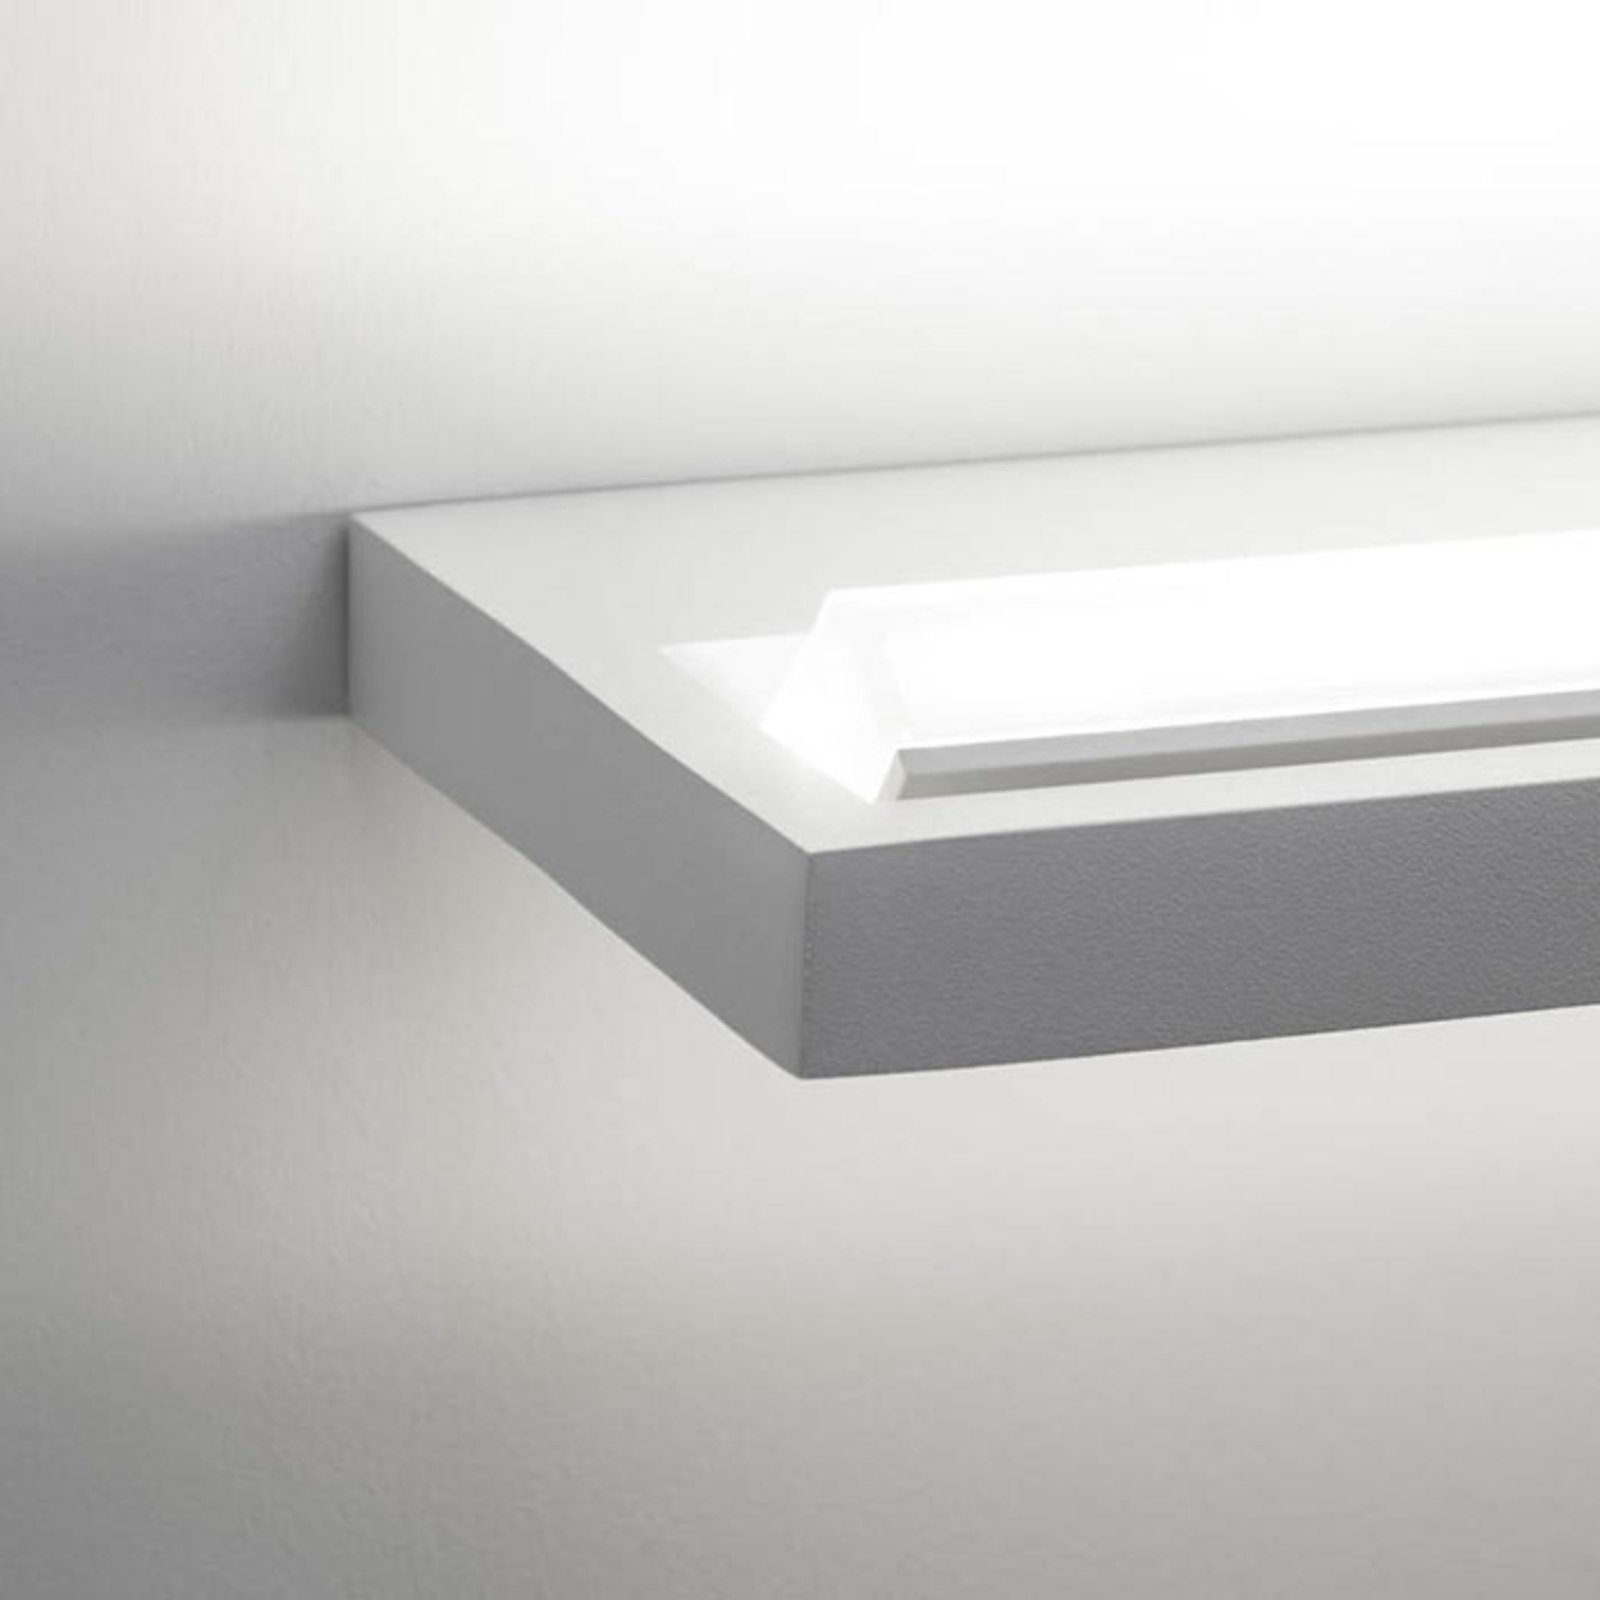 LED sienas lampa Tablet W1, platums 66 cm, balta